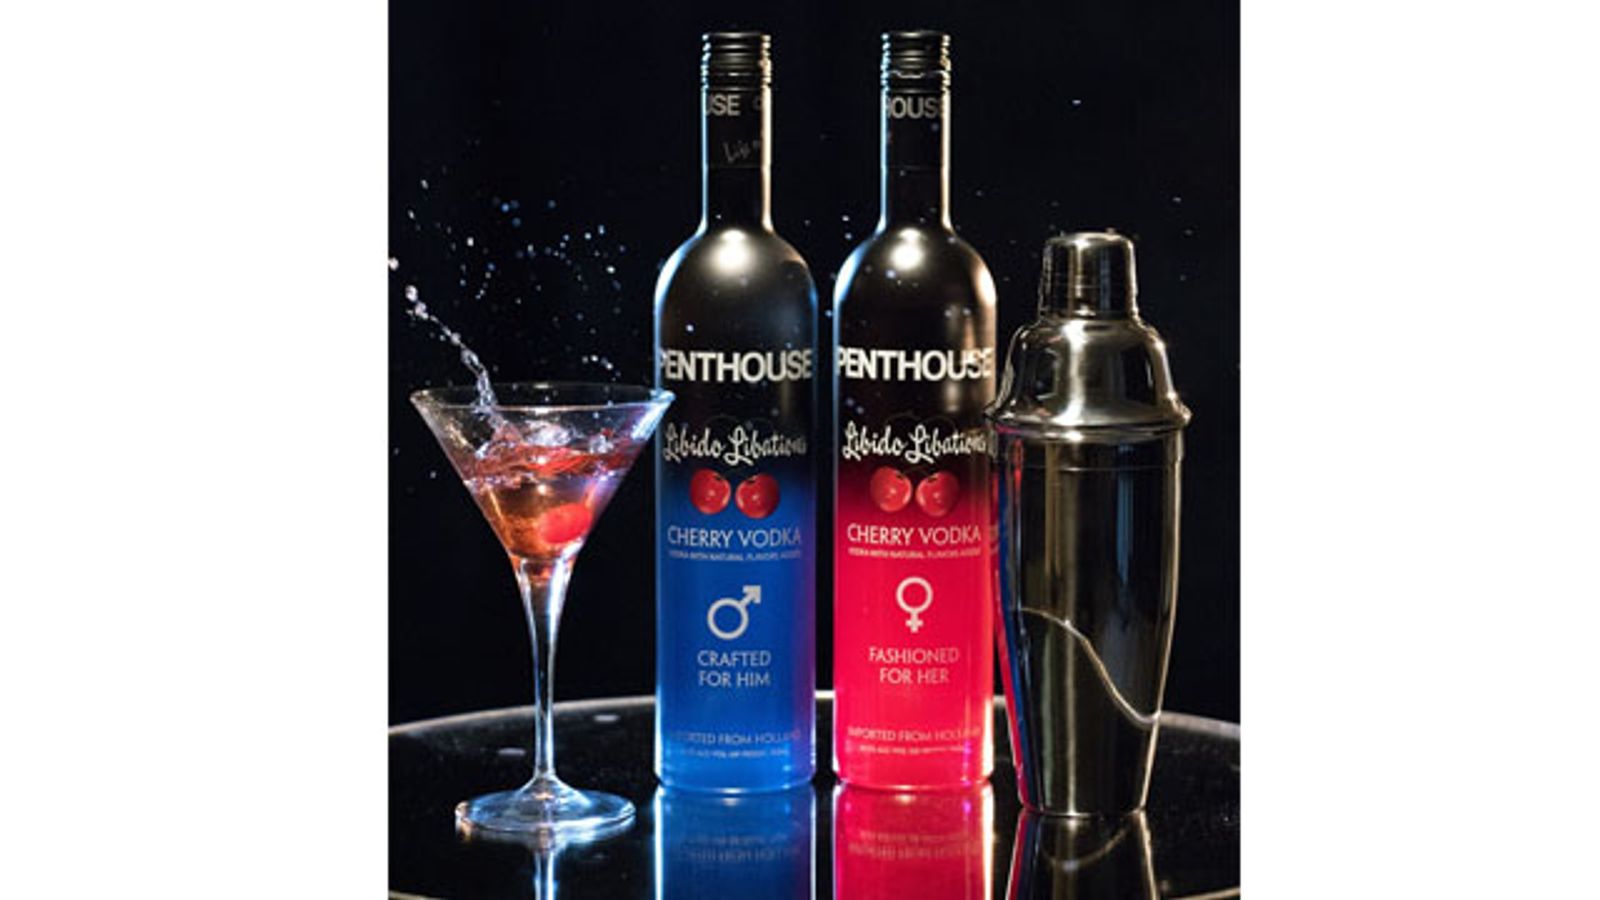 Penthouse Libido Libations Score at Wine & Spirits Competition